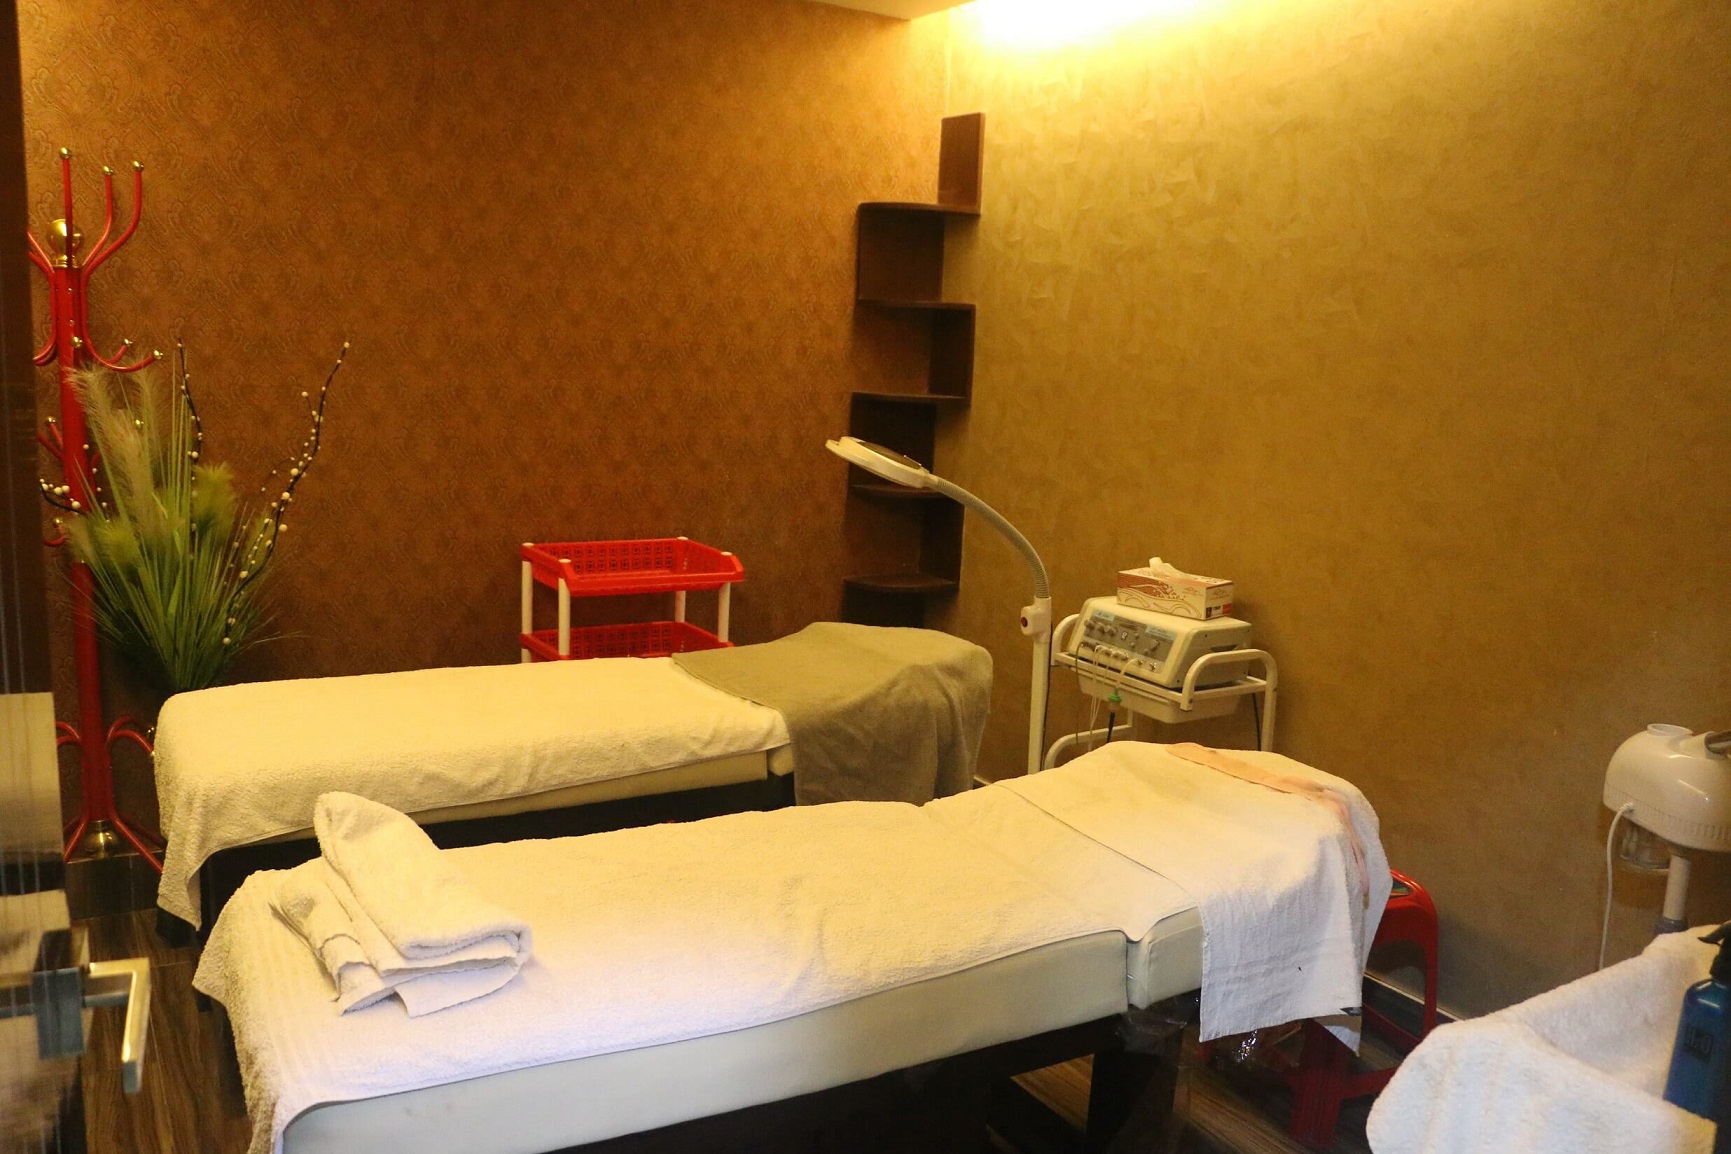 ScissorHand massage room image